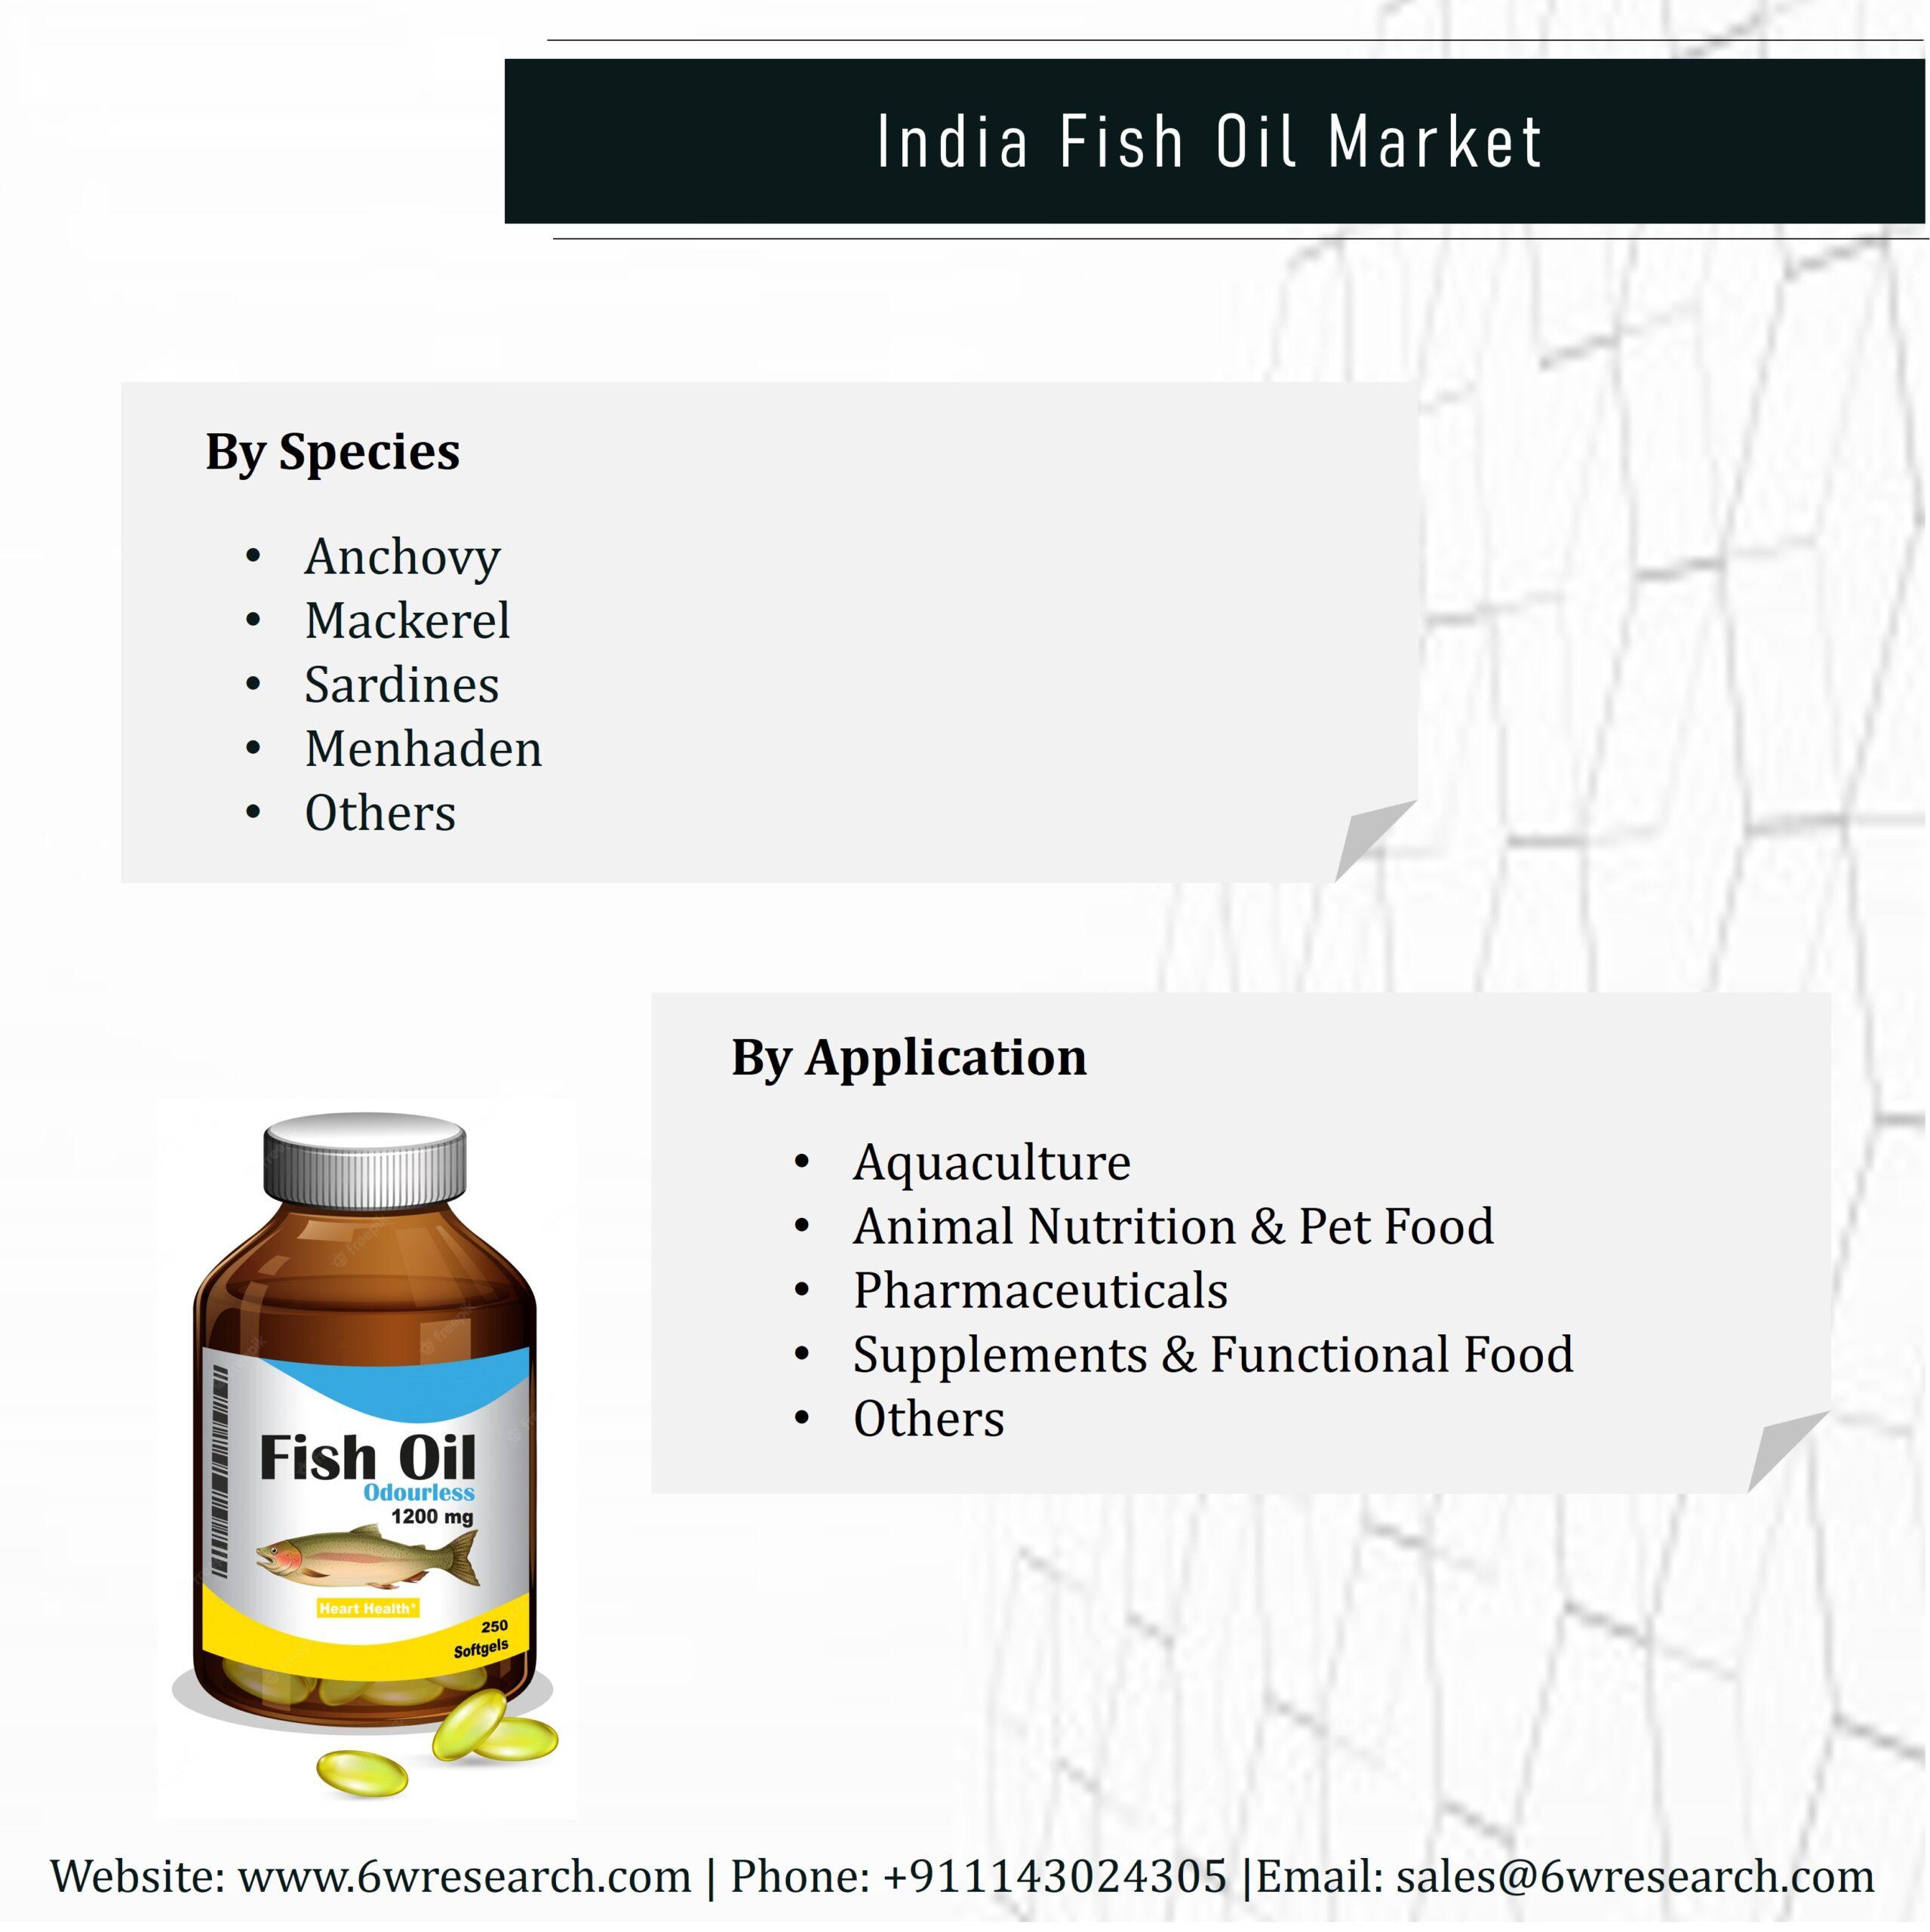 India fish oil market